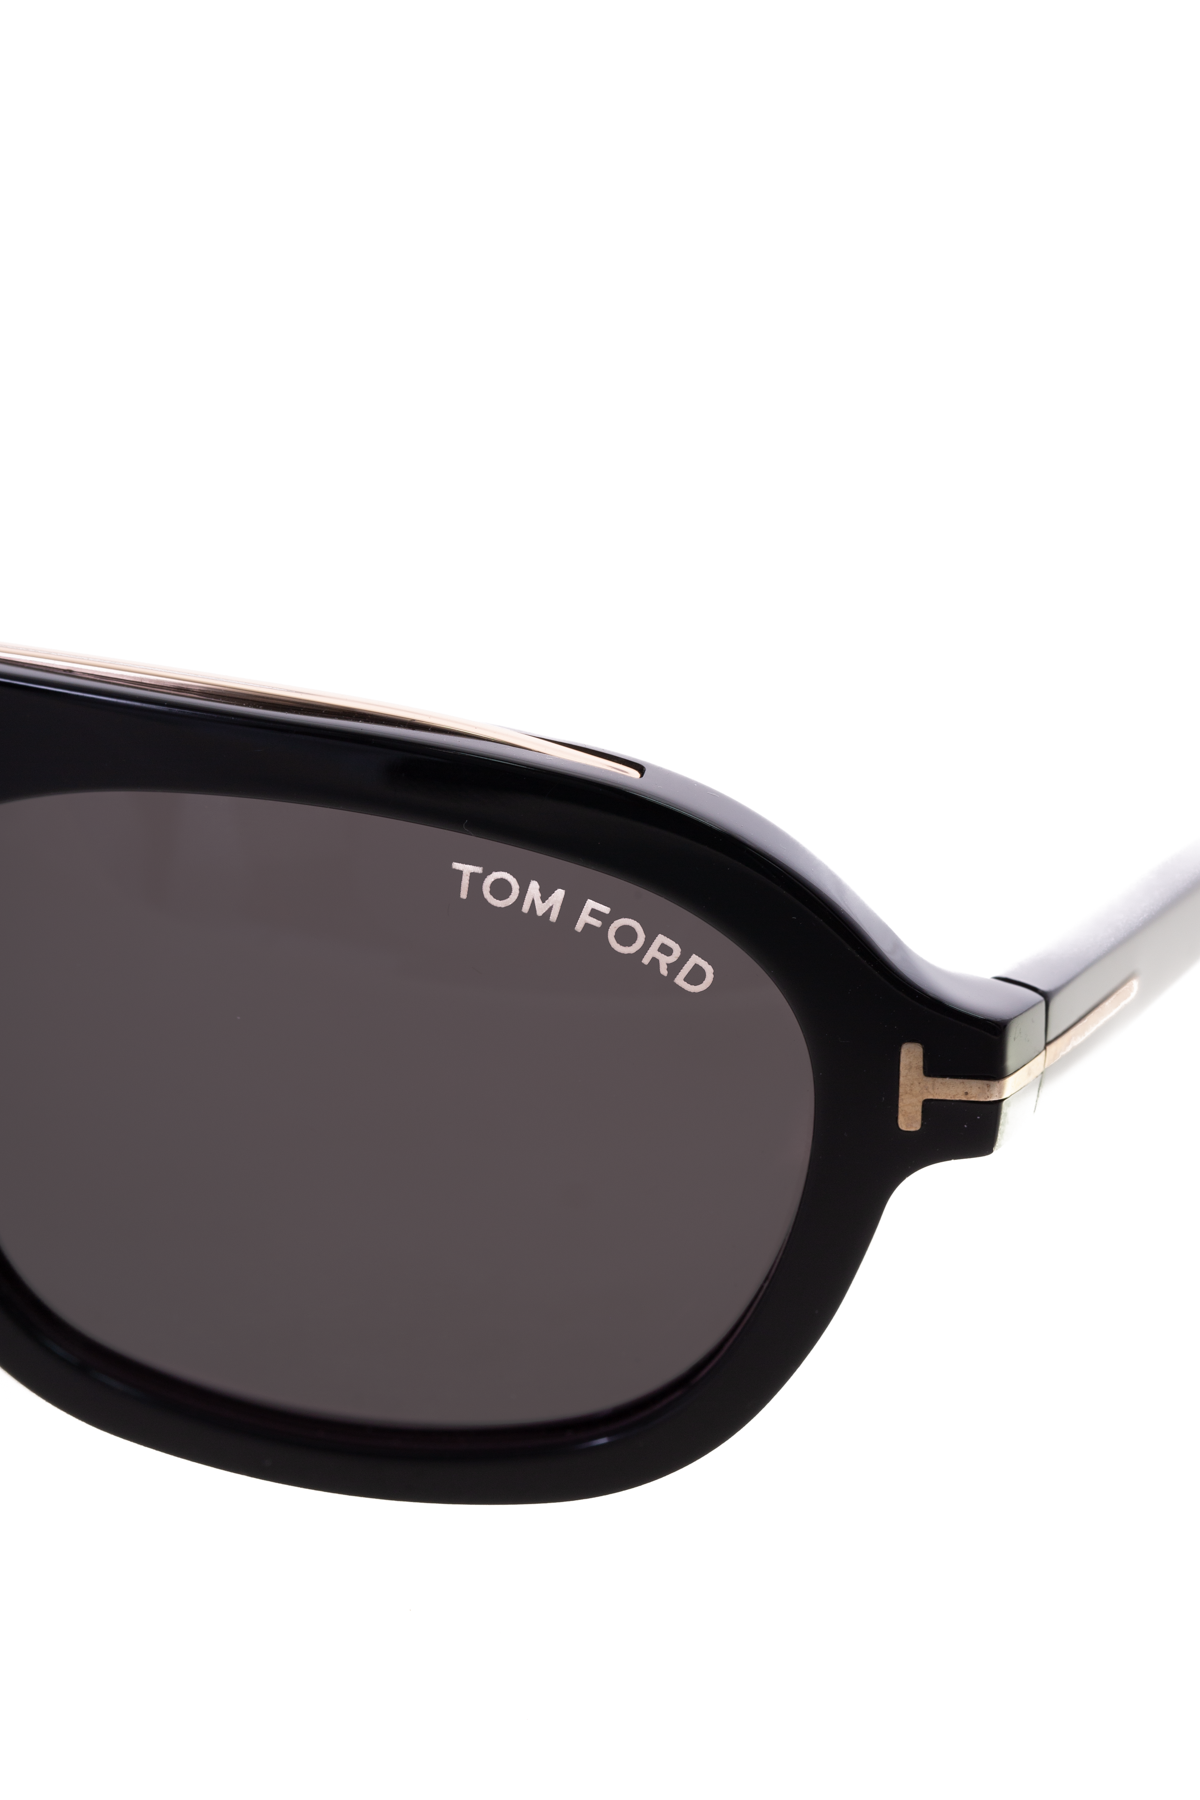 Custom made for Tom Ford prescription Rx eyeglasses: Custom Made for Tom  Ford TF5468-55X18 Polarized Clip-On Sunglasses (Eyeglasses Not Included)